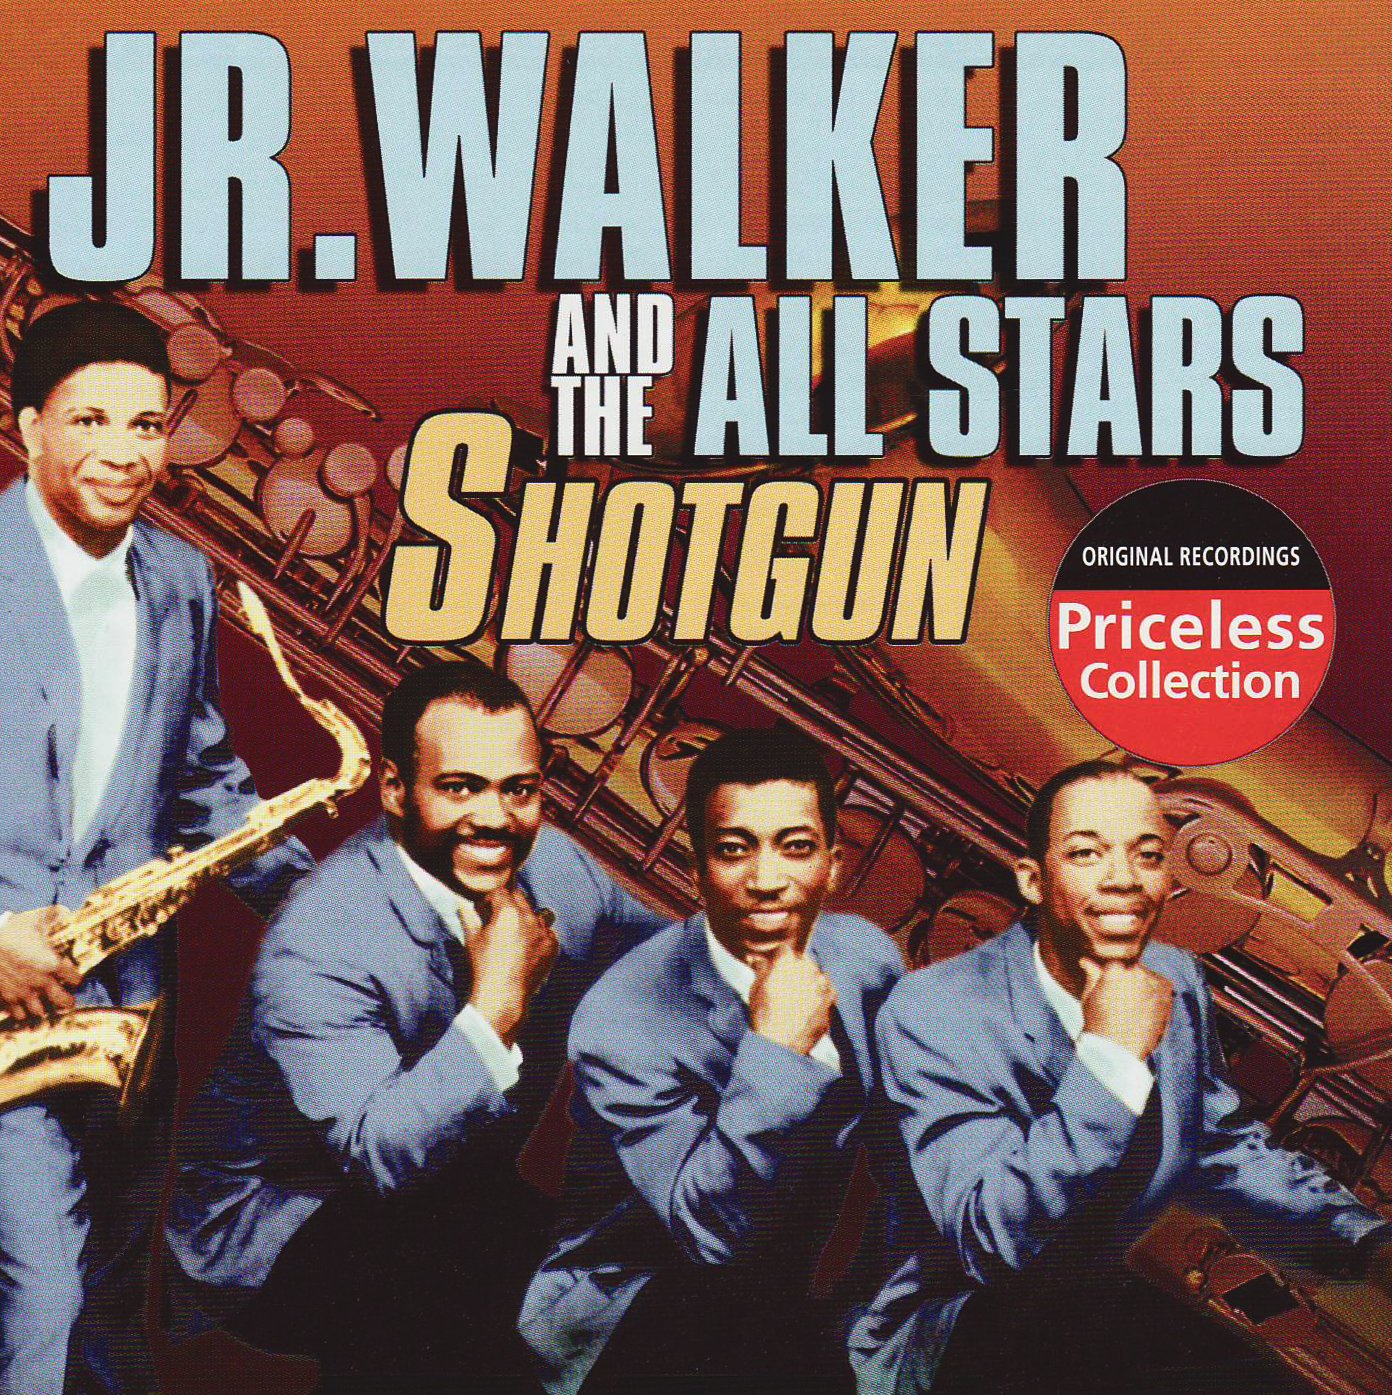 Art for Shotgun (Clean) by Junior Walker & The All Stars